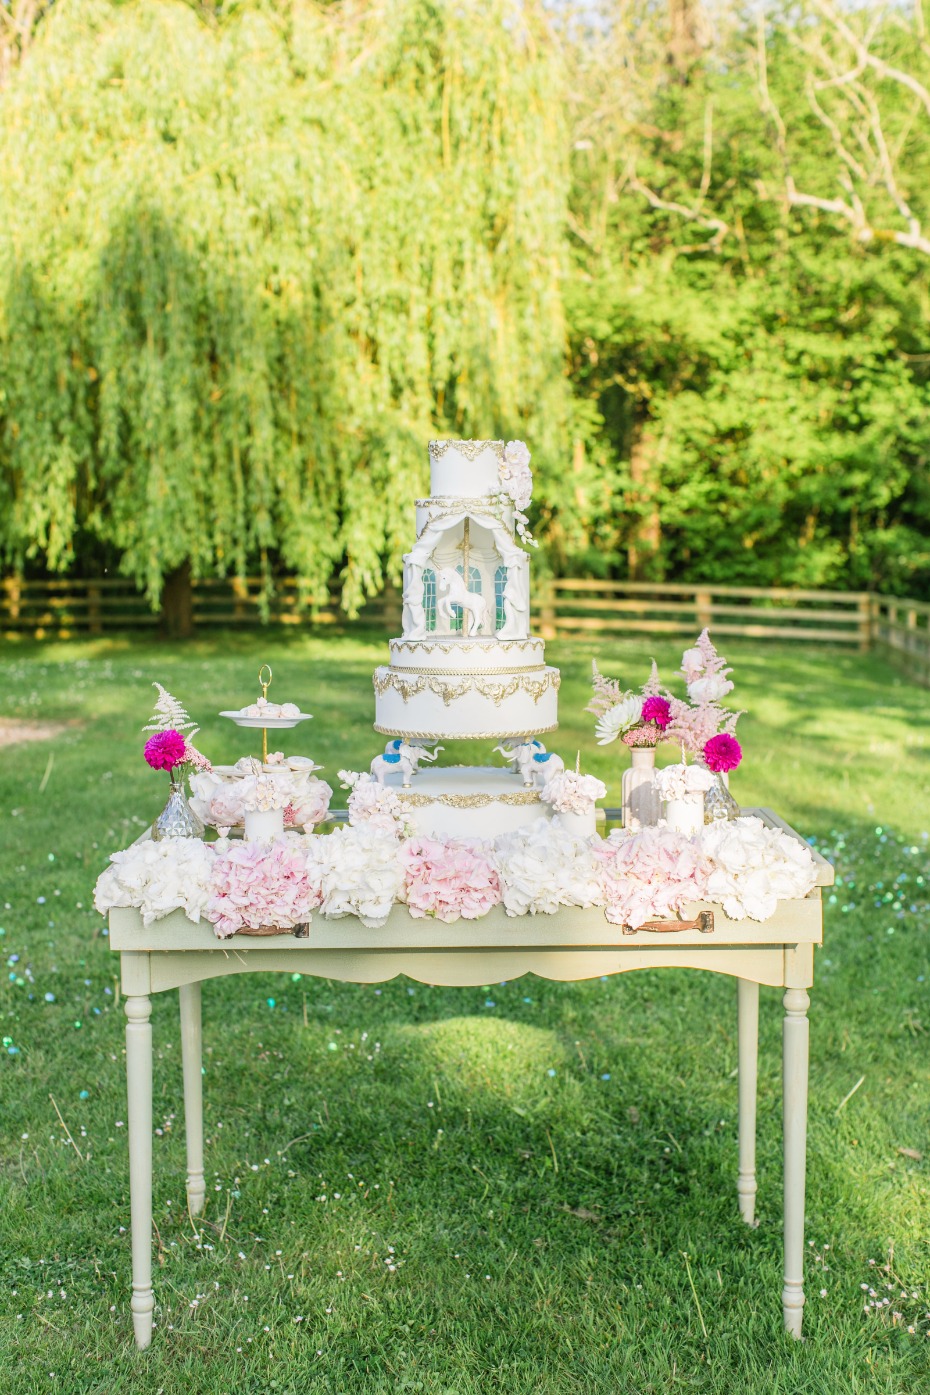 Carousel wedding cake